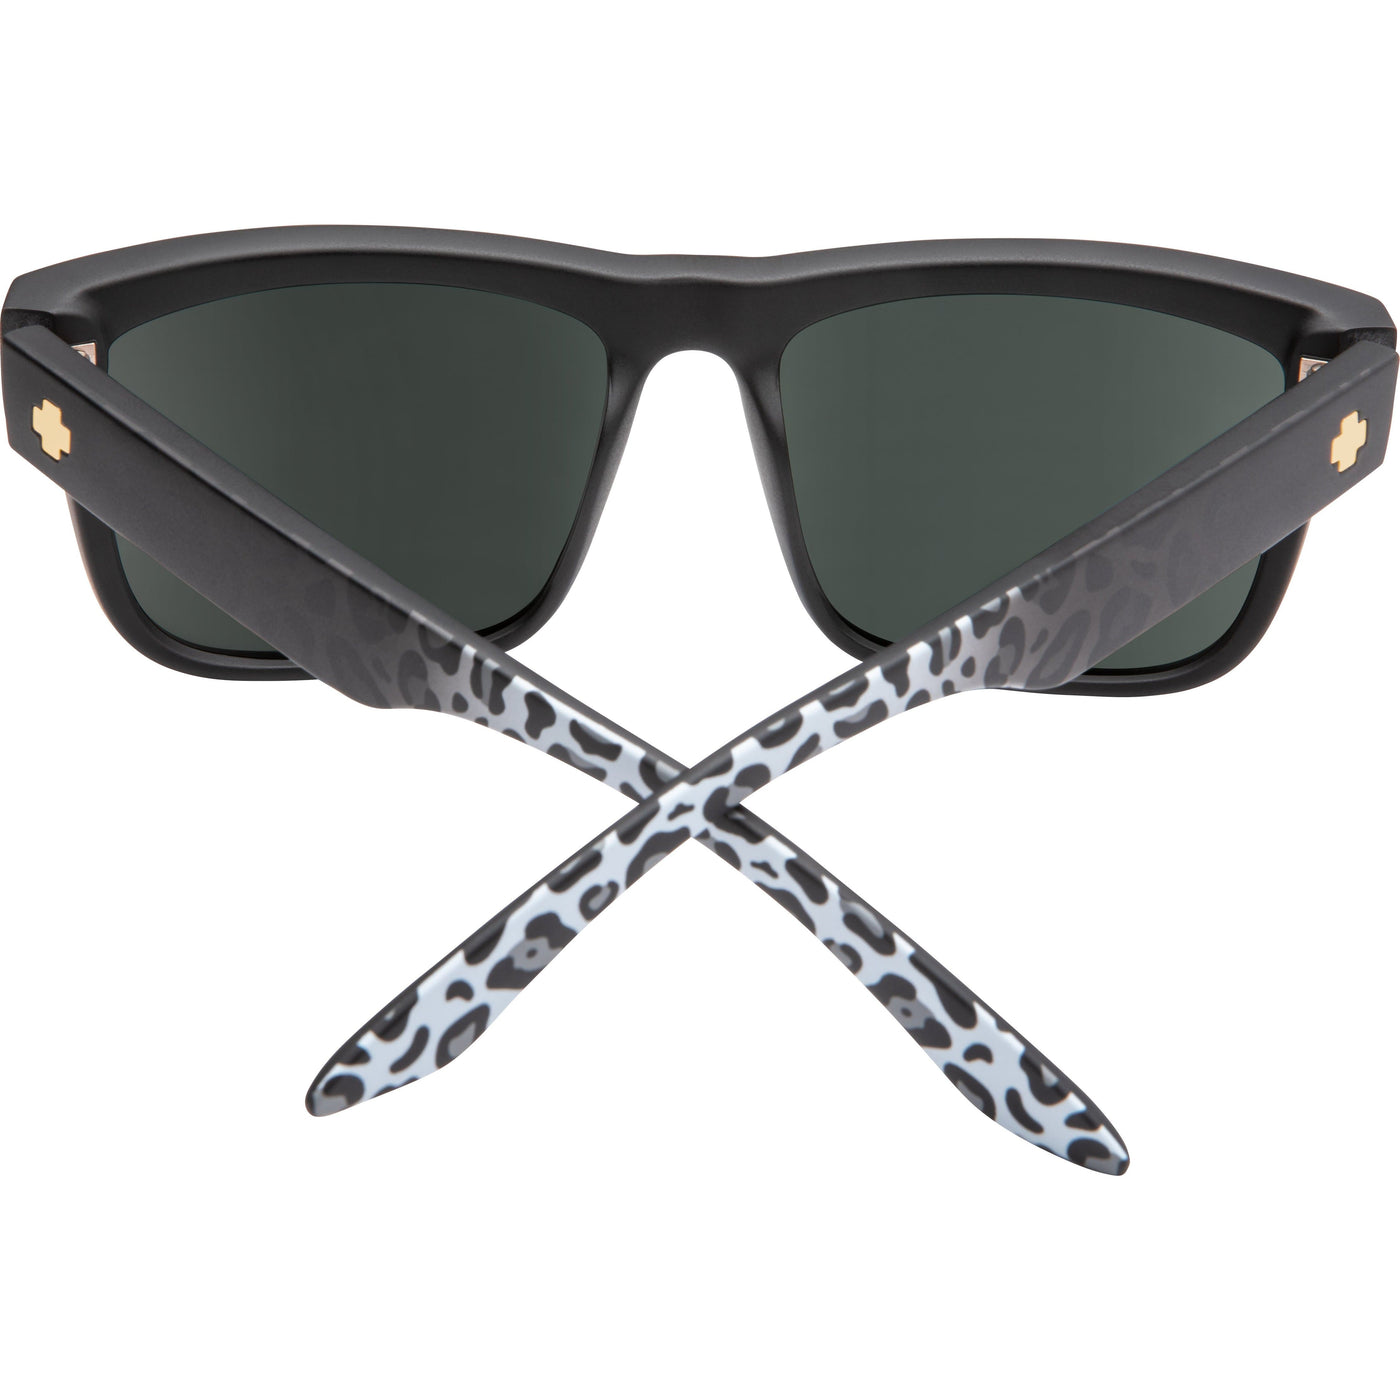 SPY Optic DISCORD Sunglasses, Happy Lens - Leopard Fade 8Lines Shop - Fast Shipping